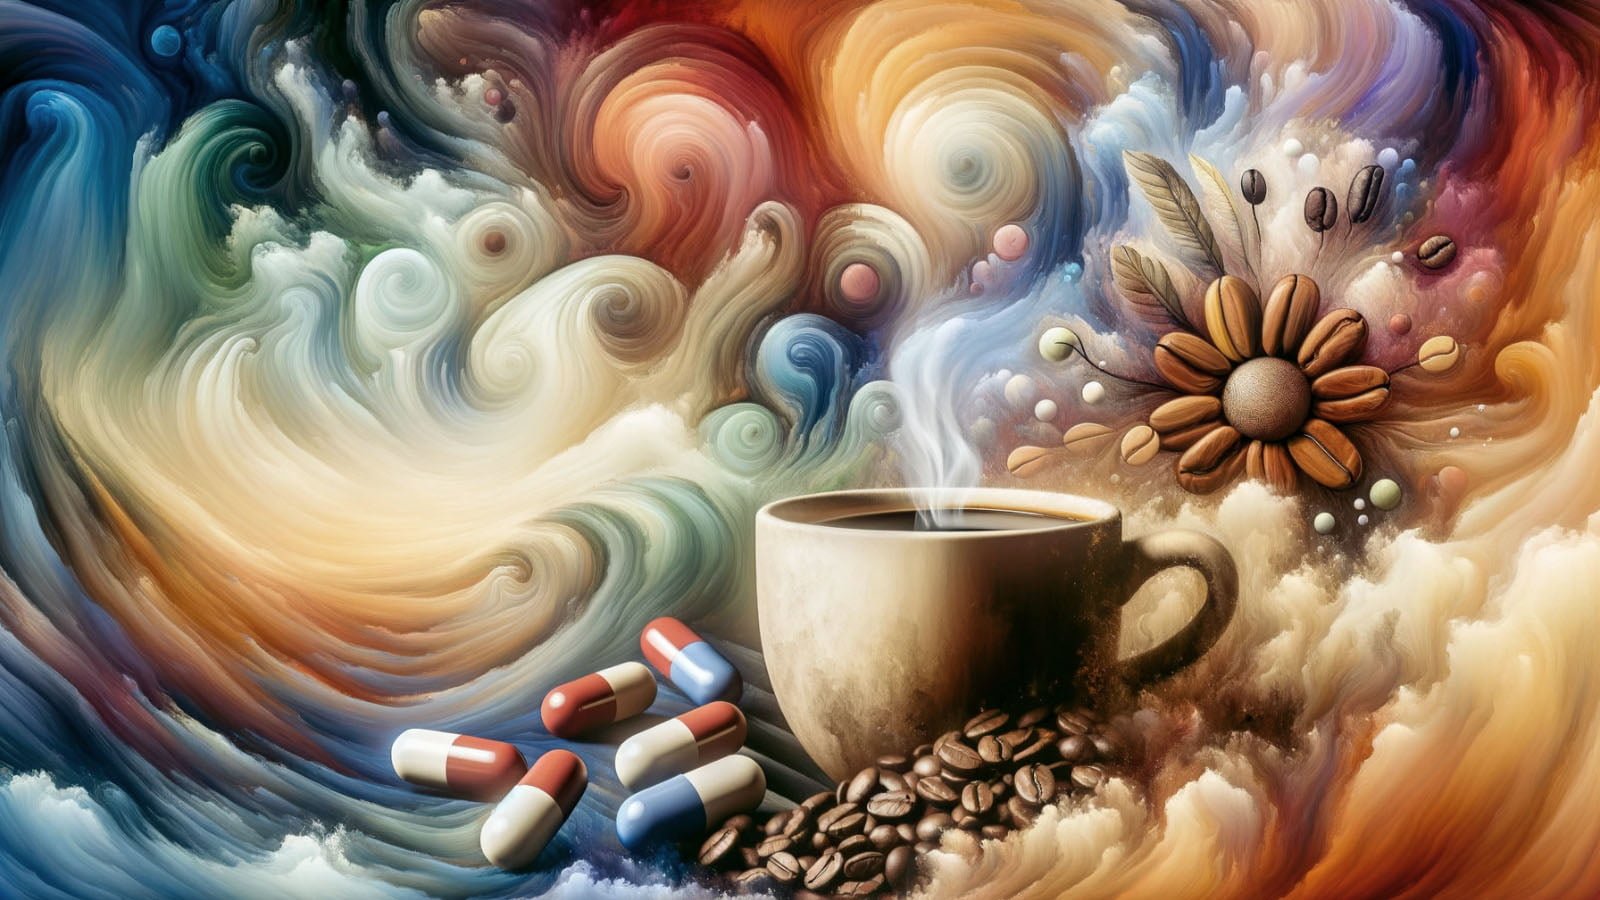 A comparison of caffeine pill alternatives focusing on health impacts.